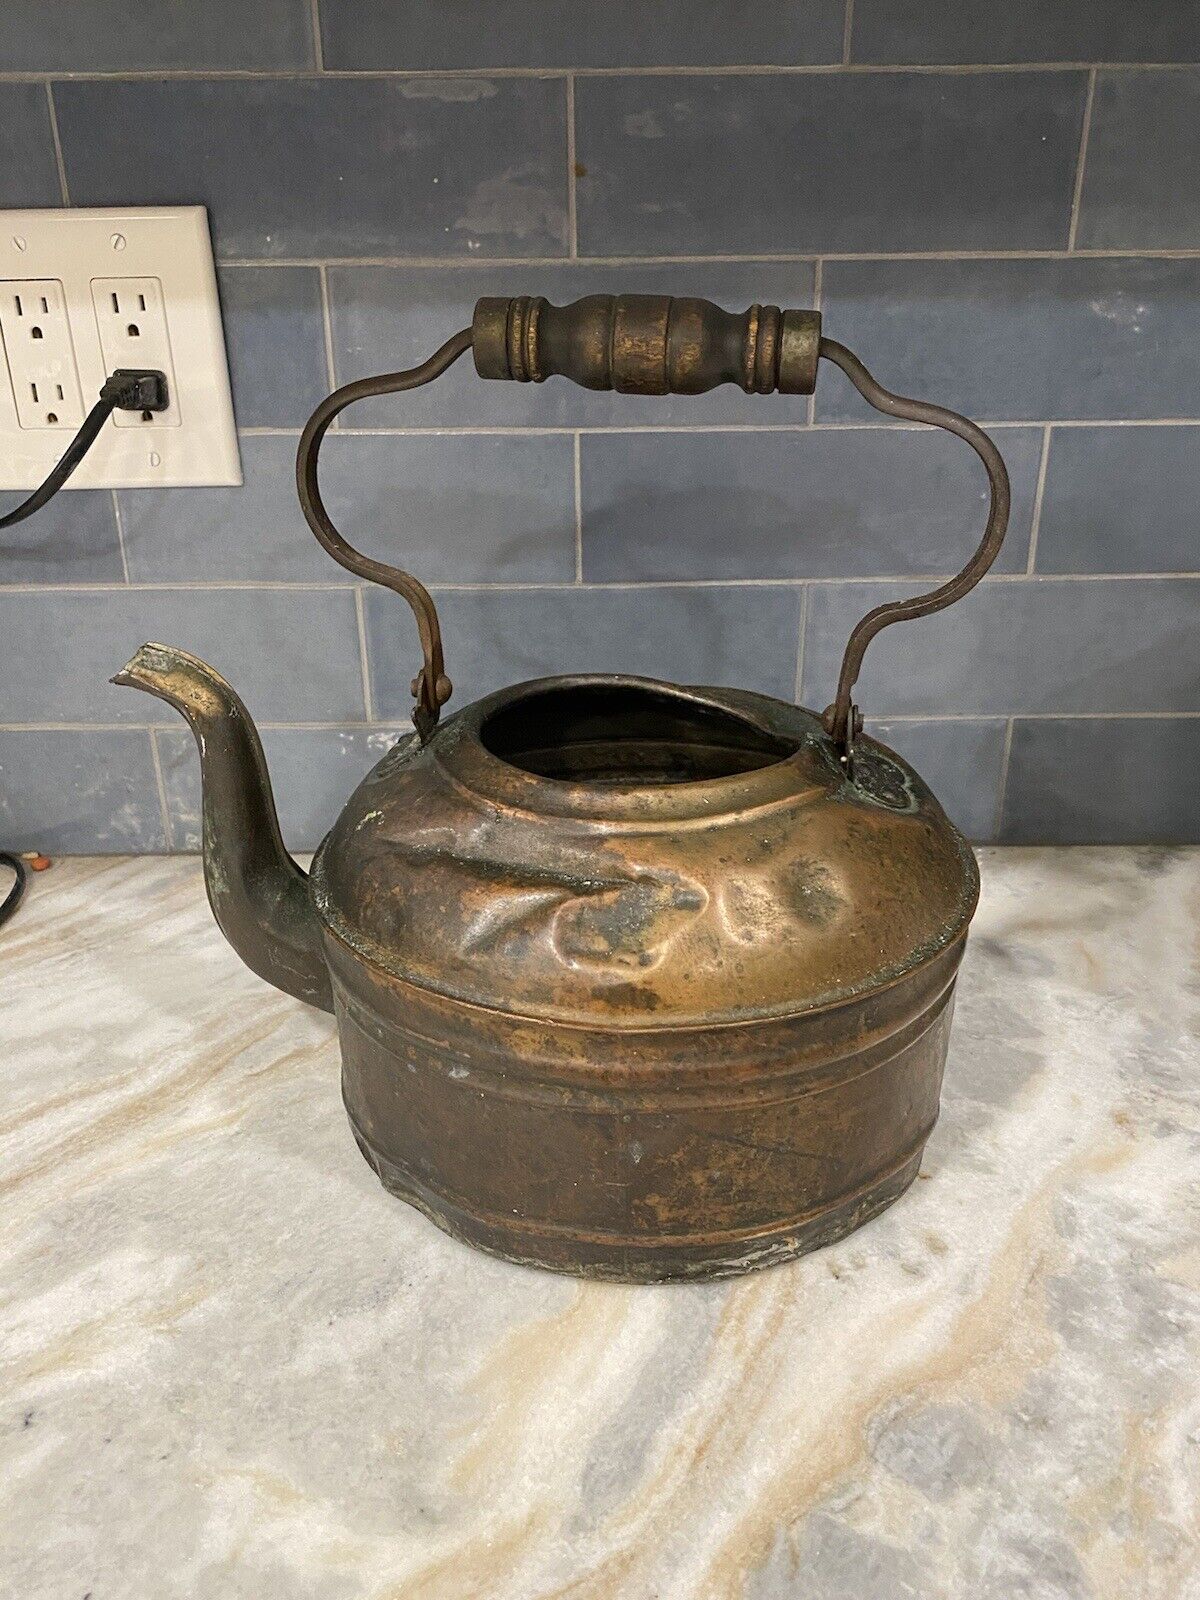 Vintage Copper Teapot Tea Kettle With Wood Handle